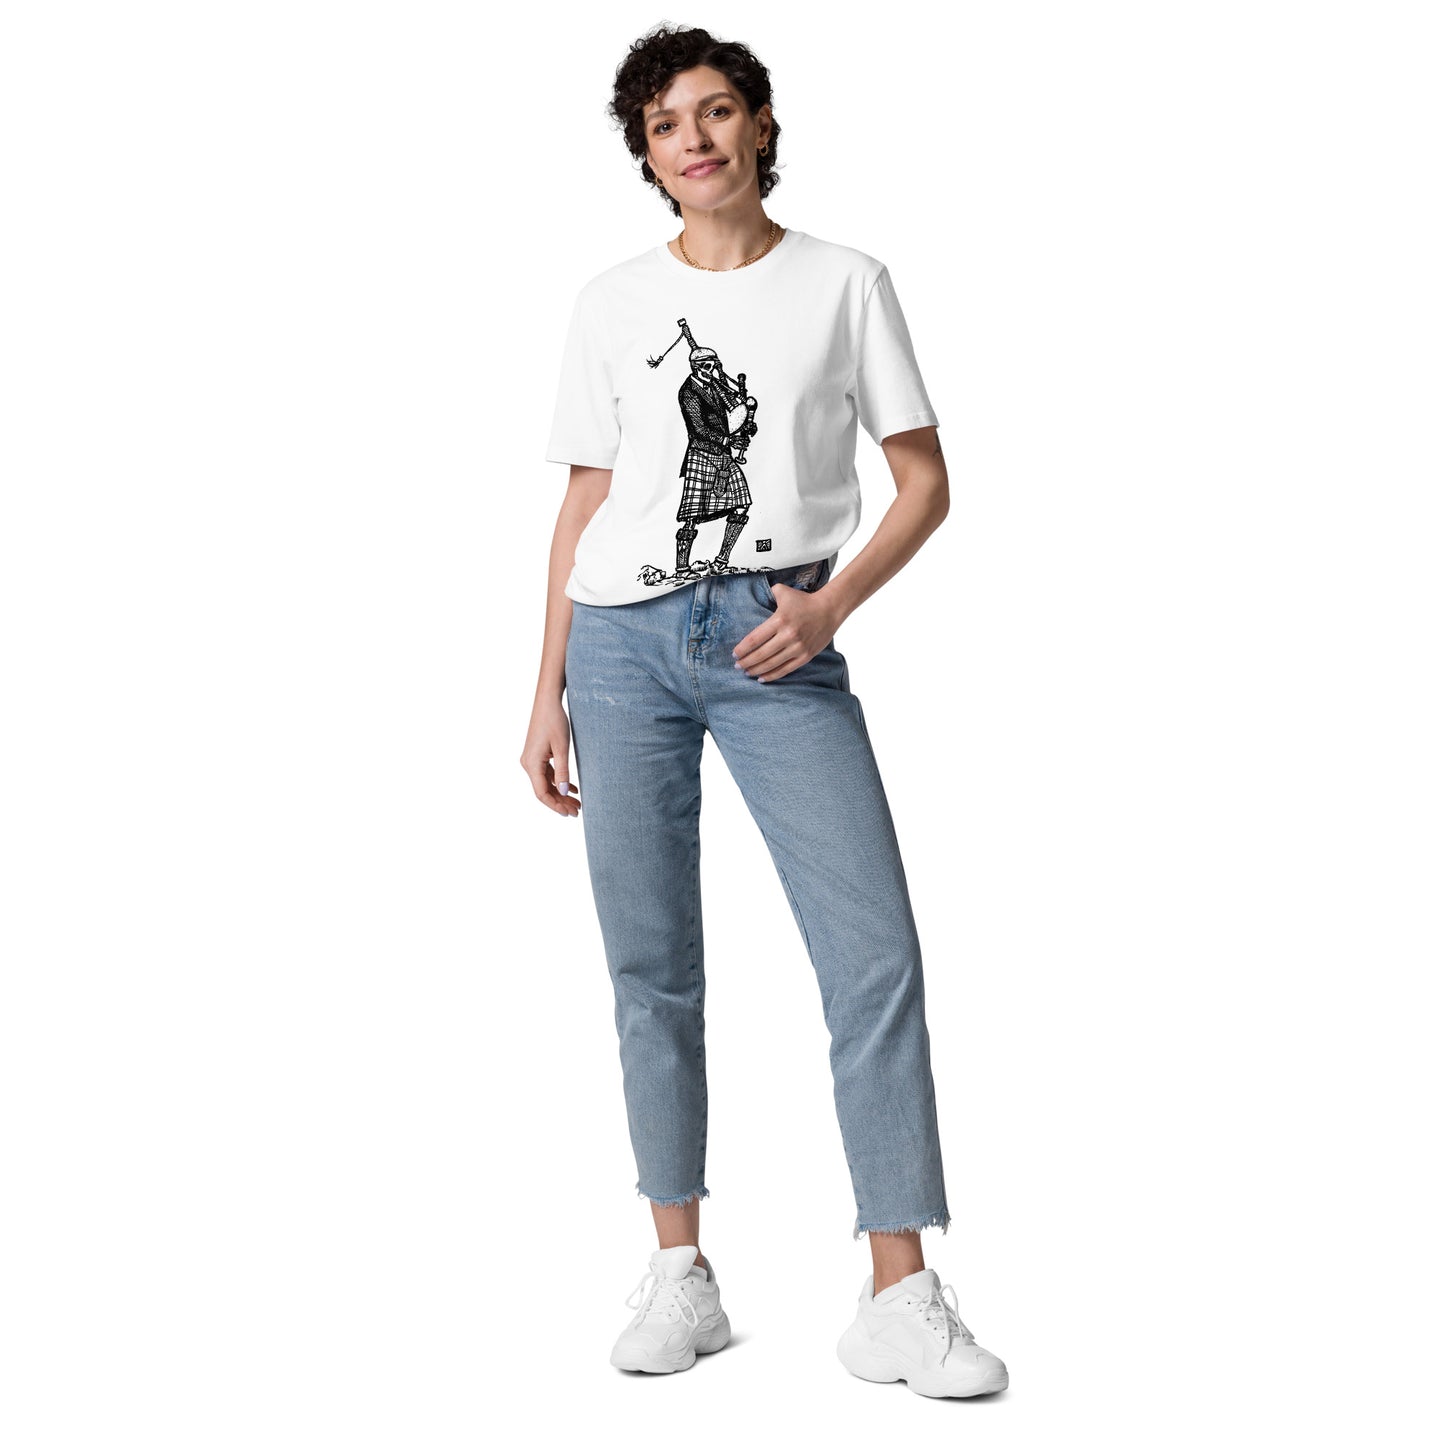 PIPE DREAM White/Khaki Unisex T-Shirt B/W Print